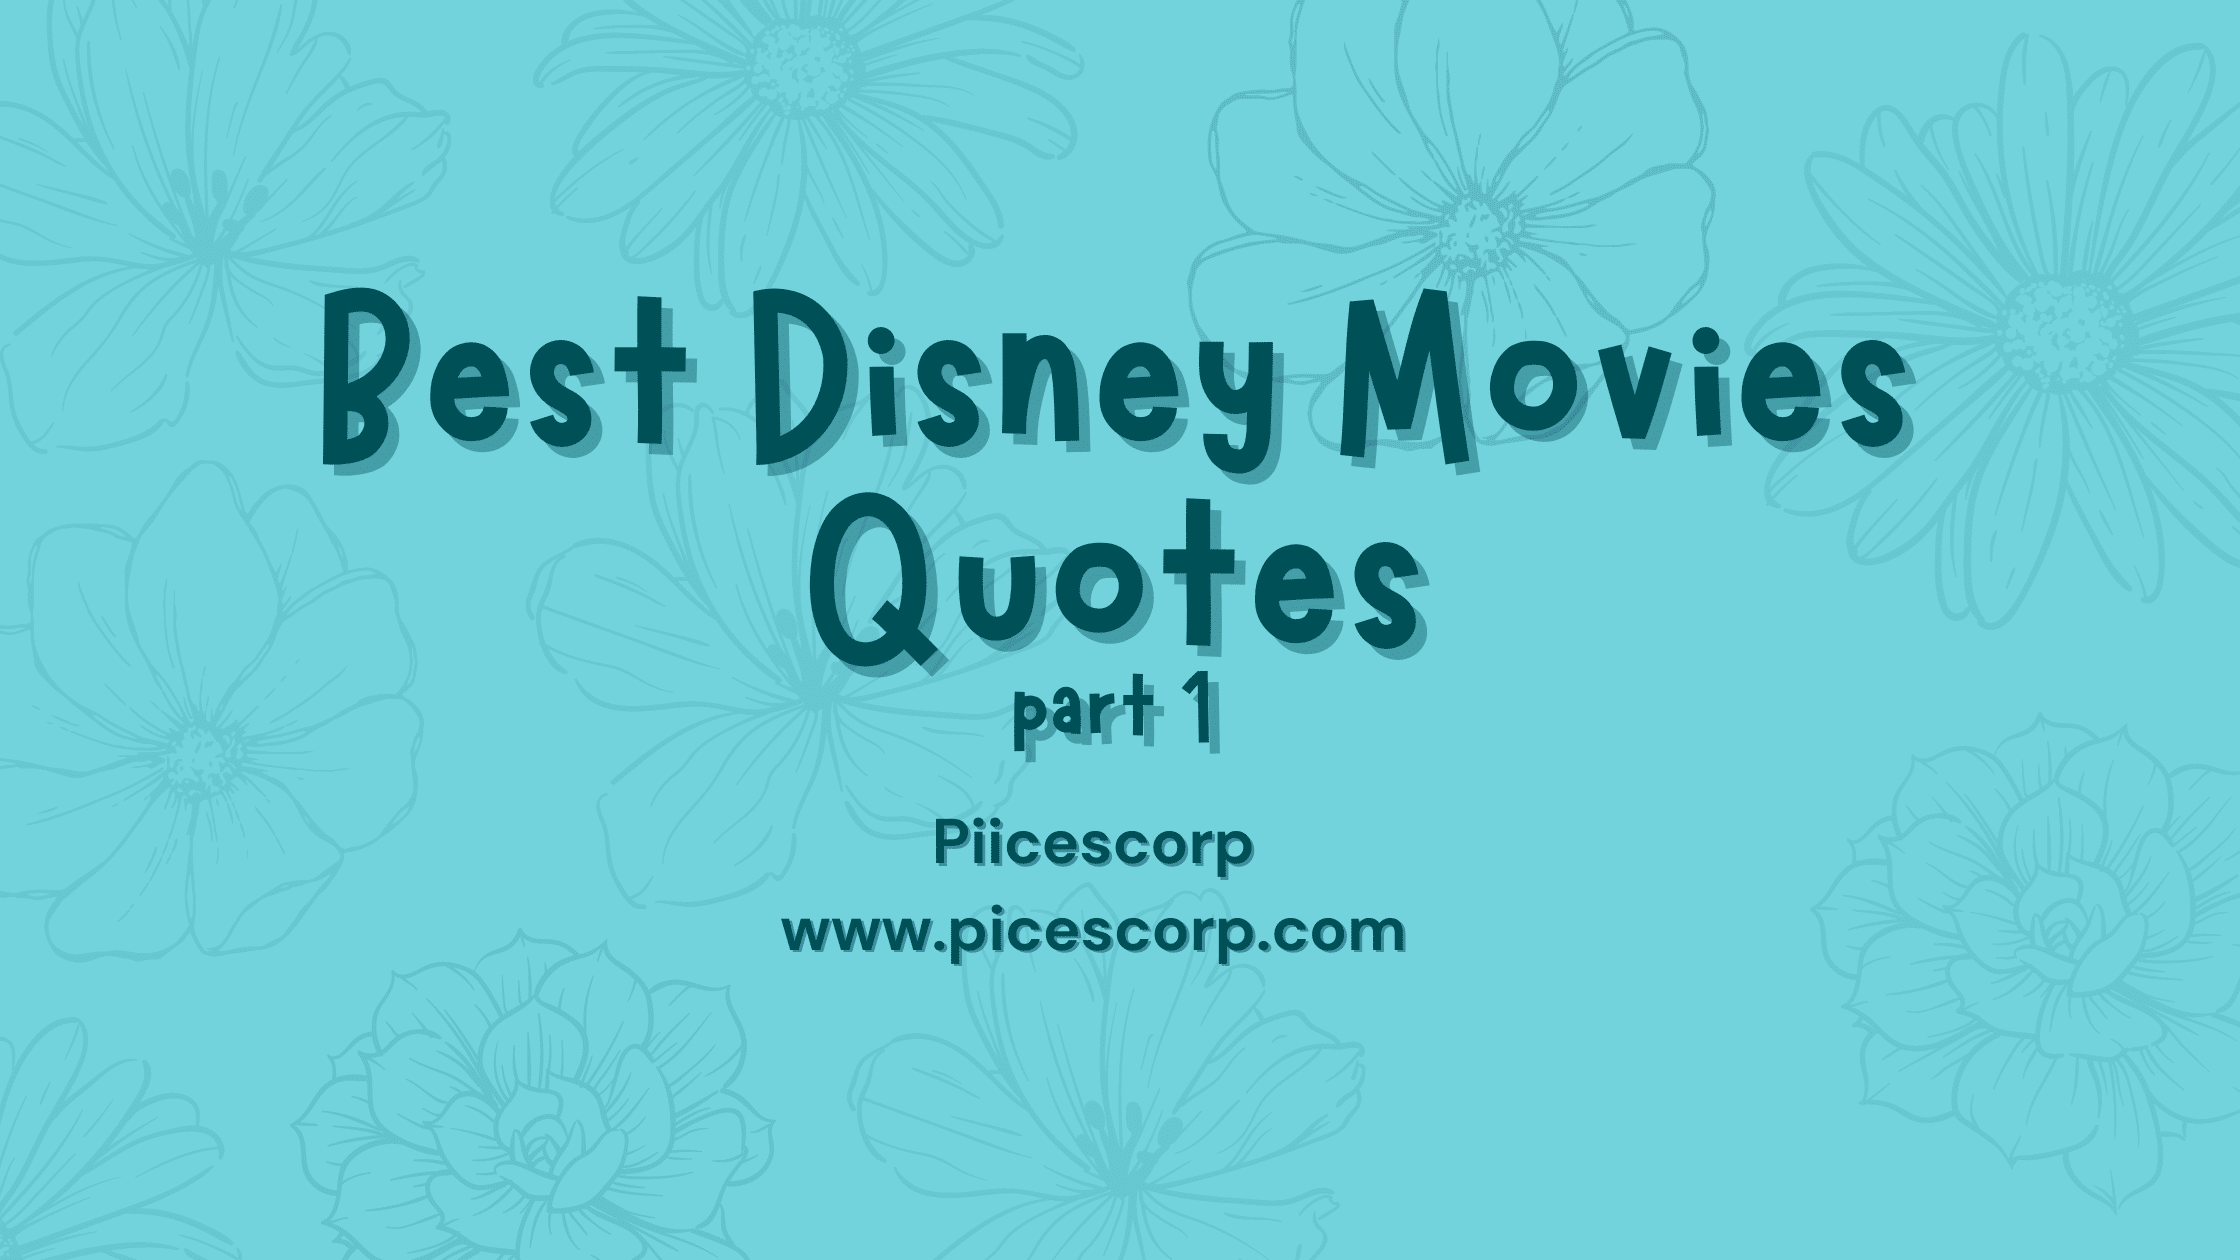 Best The Disney movies Quotes